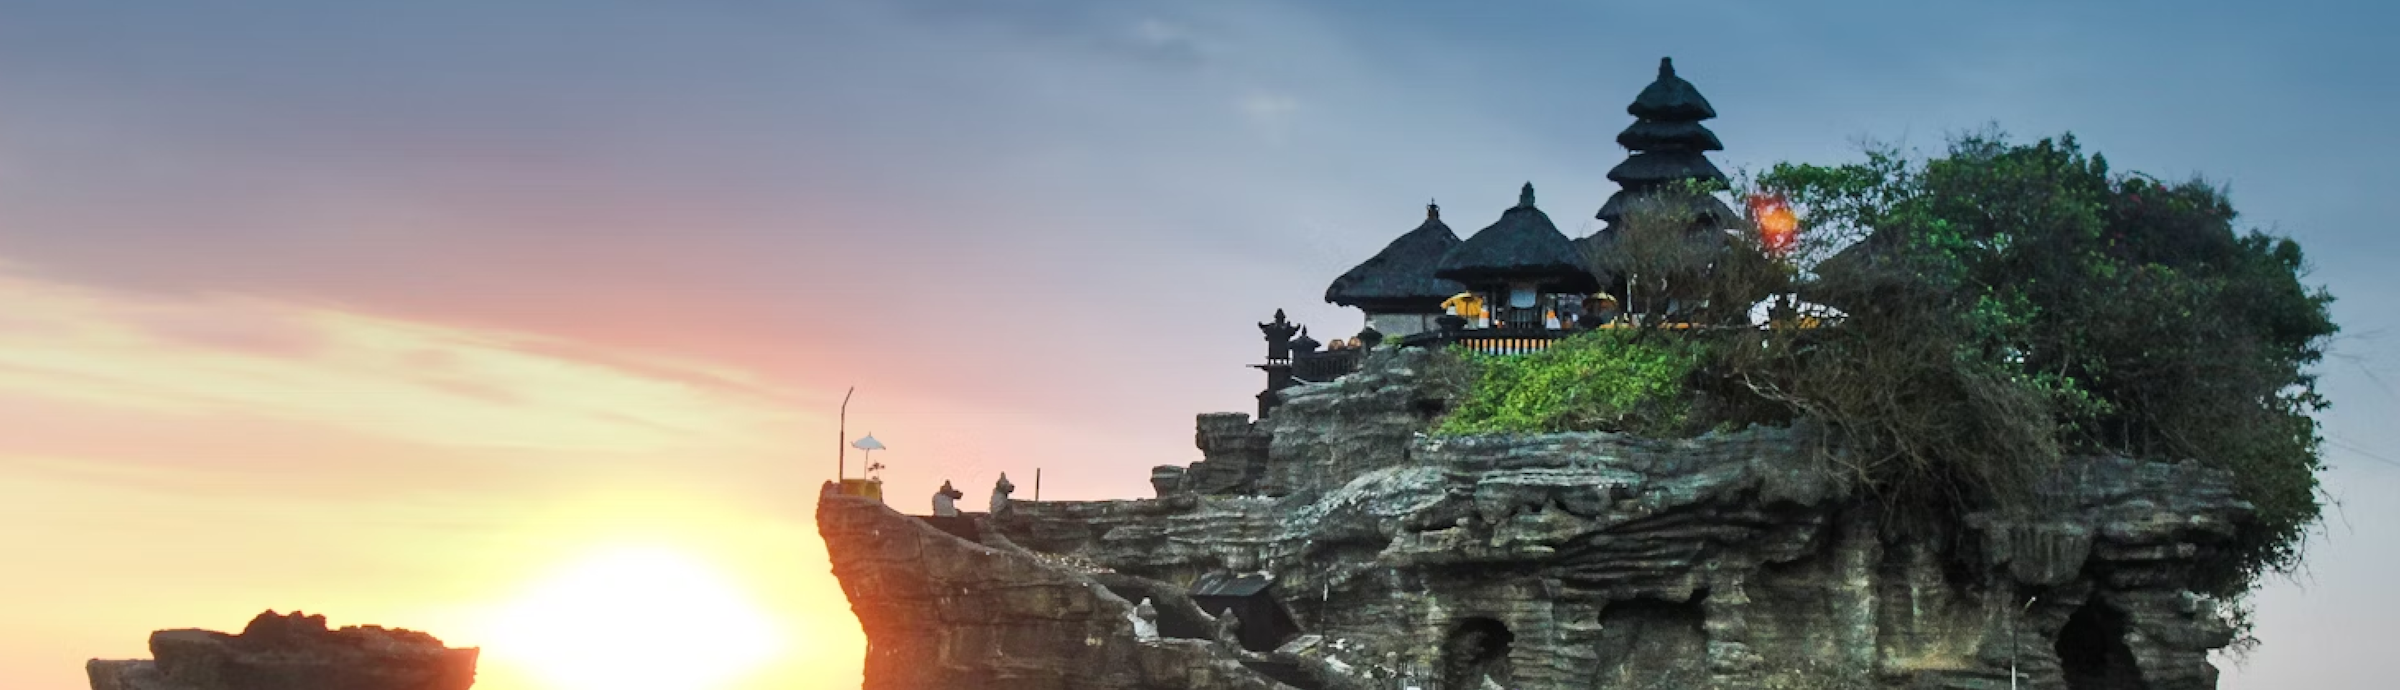 Bali Adventure Tour Packages